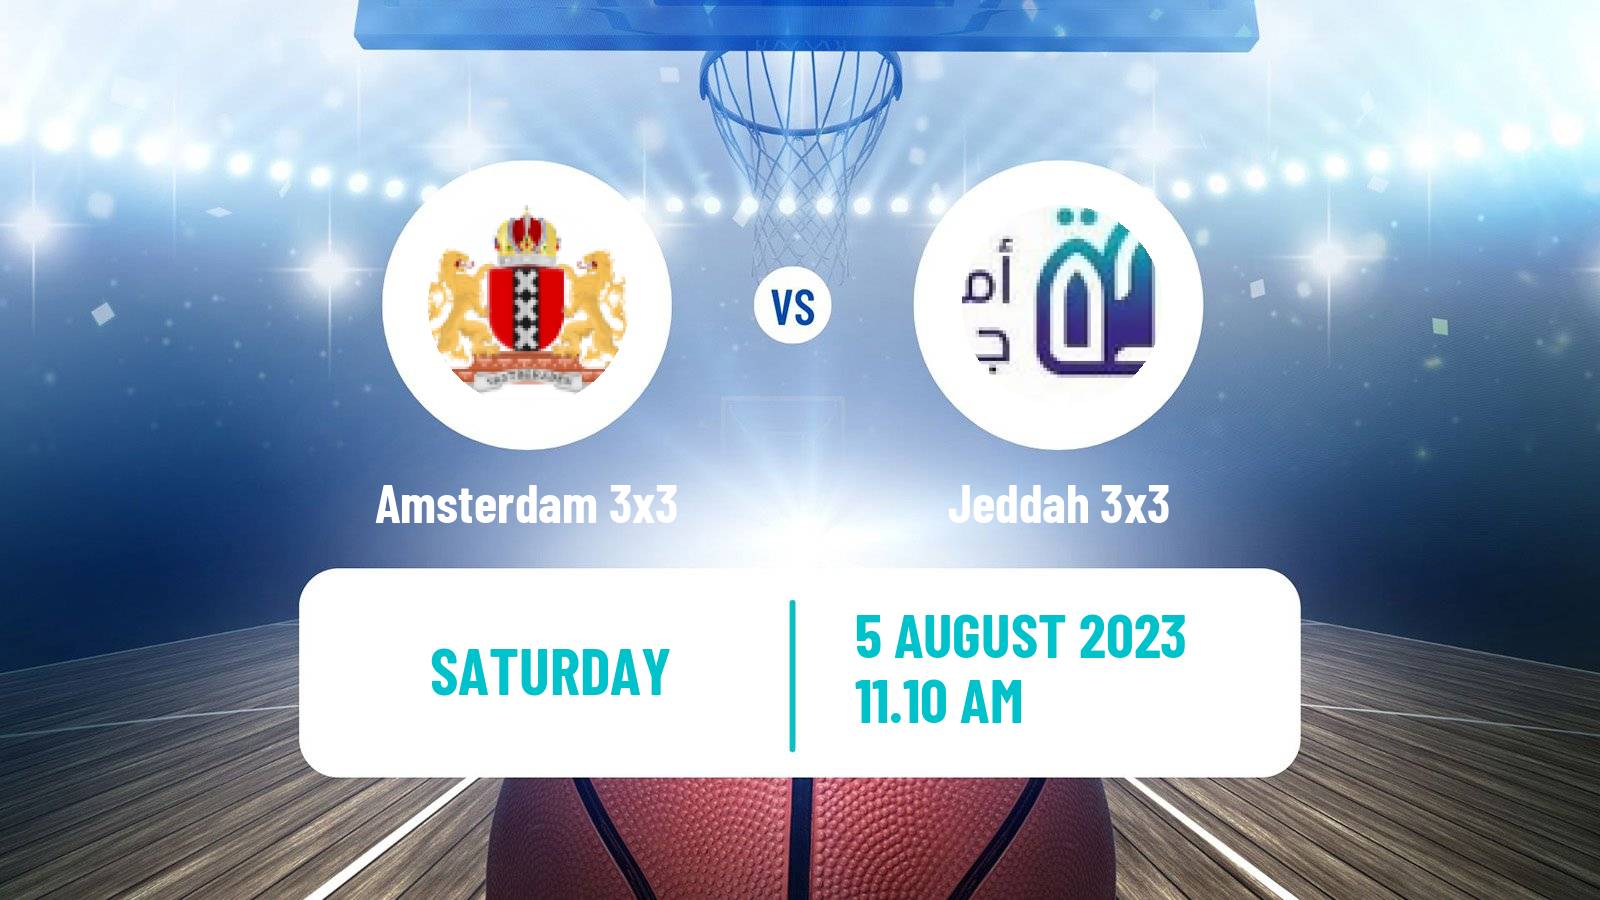 Basketball World Tour Prague 3x3 Amsterdam 3x3 - Jeddah 3x3